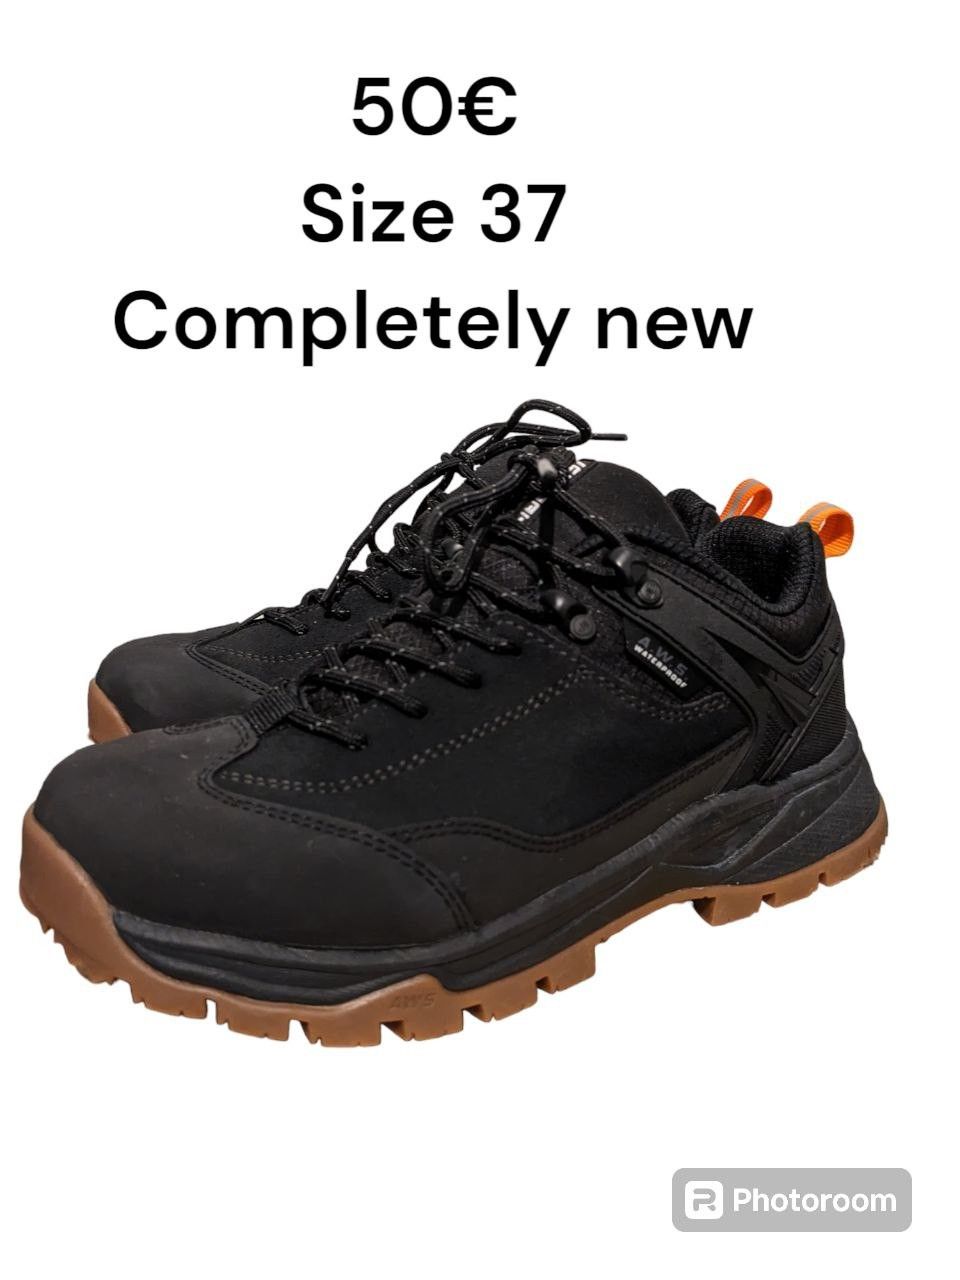 Icepeak Abai Ms (Waterproof shoes for women, size 37)